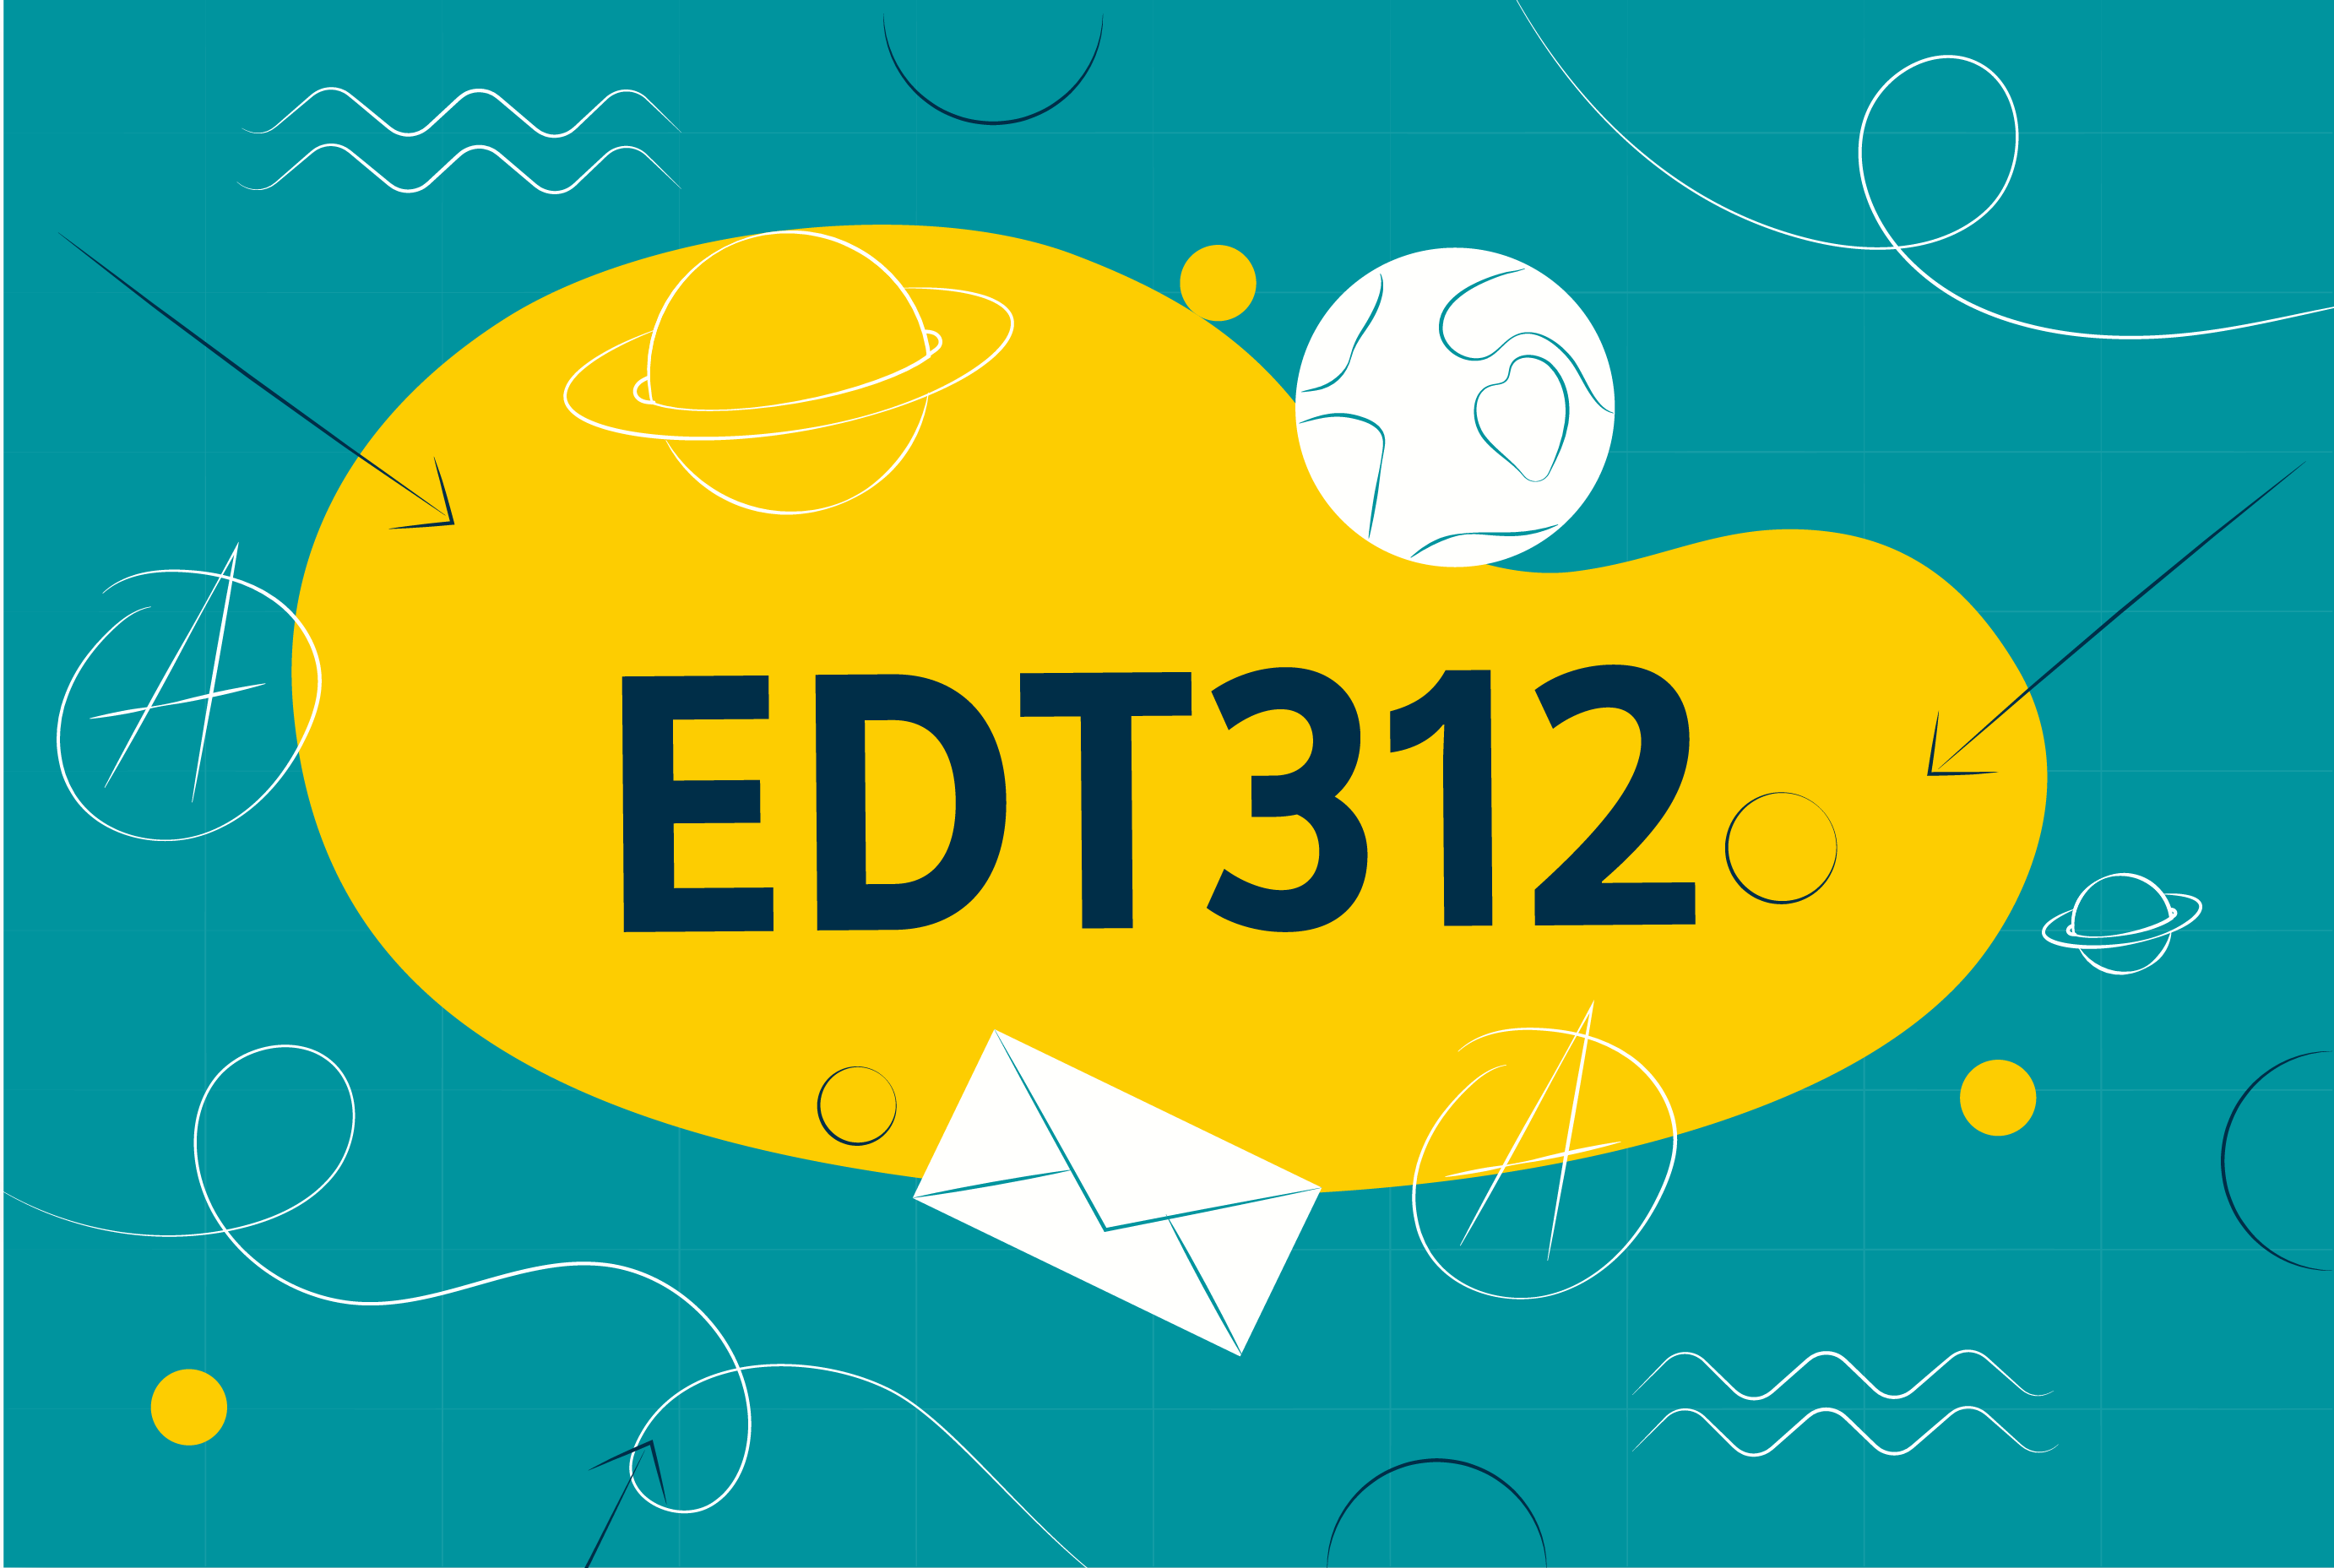 EDT312 EDUCATIONAL TECHNOLOGY FOR TEACHERS 